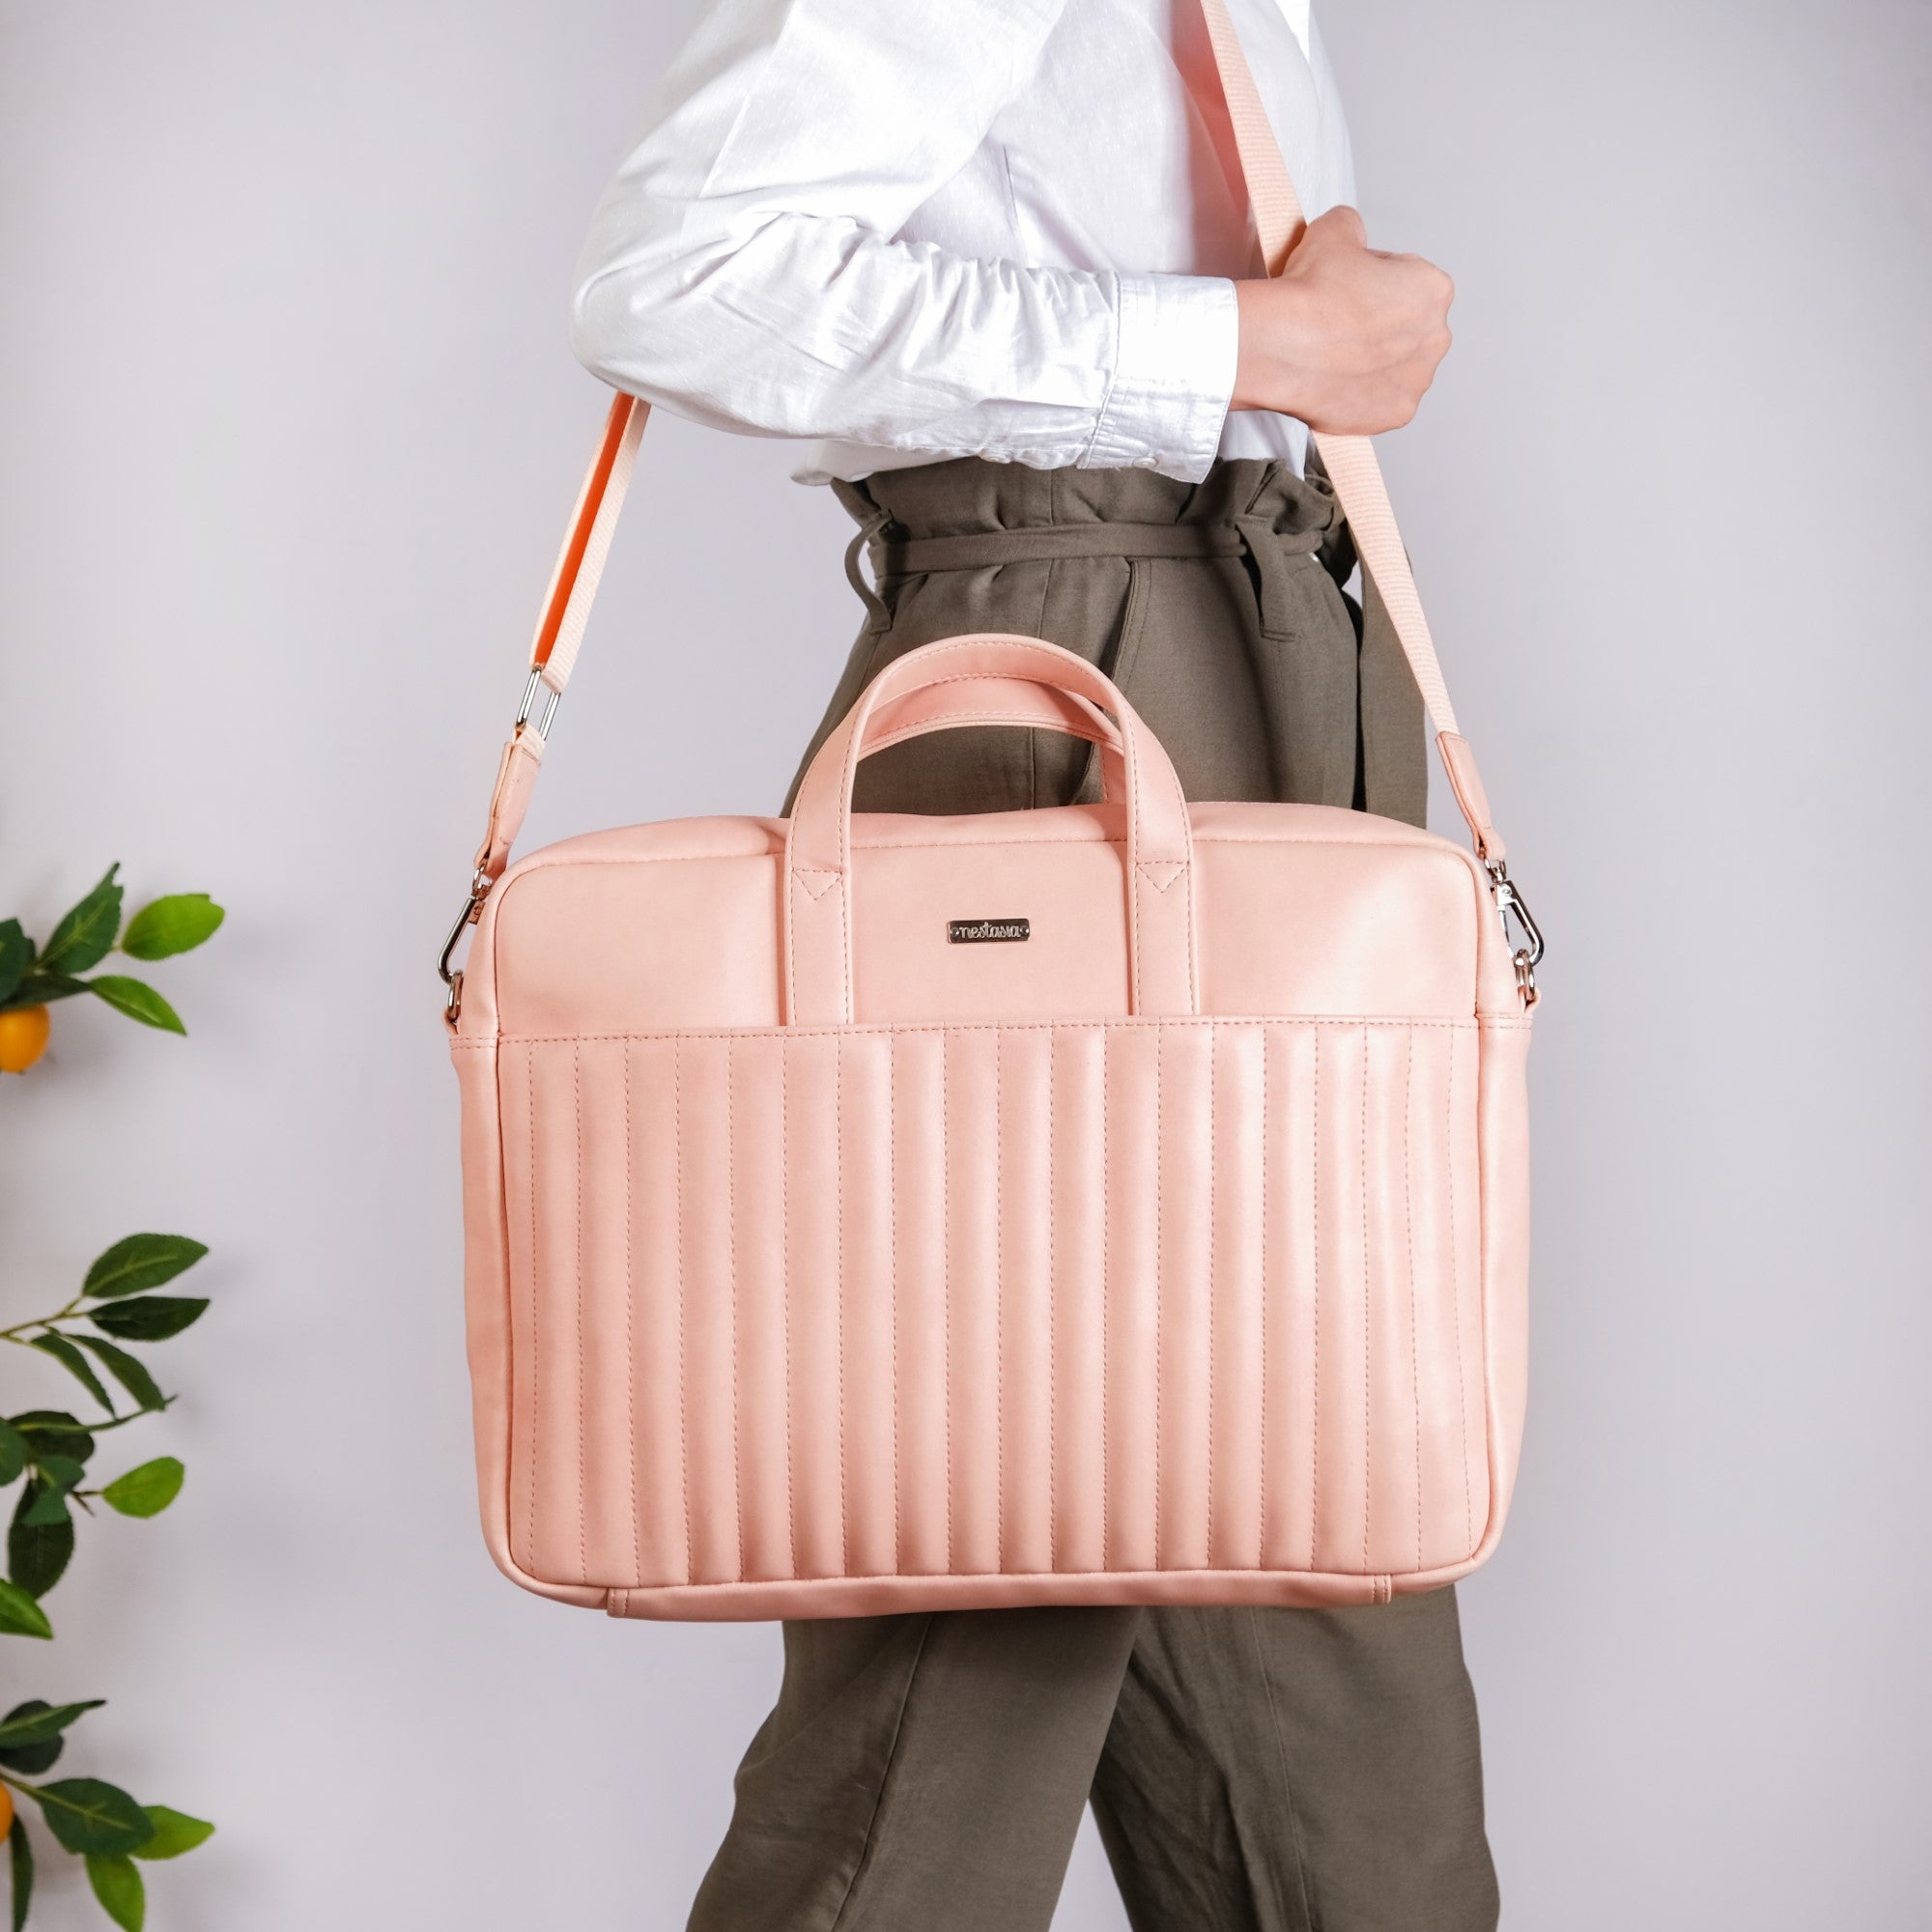 Etereauty 4pcs Travel Shoe Bags Waterproof Polyester Bags Shoe Pouch with Zipper, Adult Unisex, Size: 9.06 x 5.24 x 1.97, Black